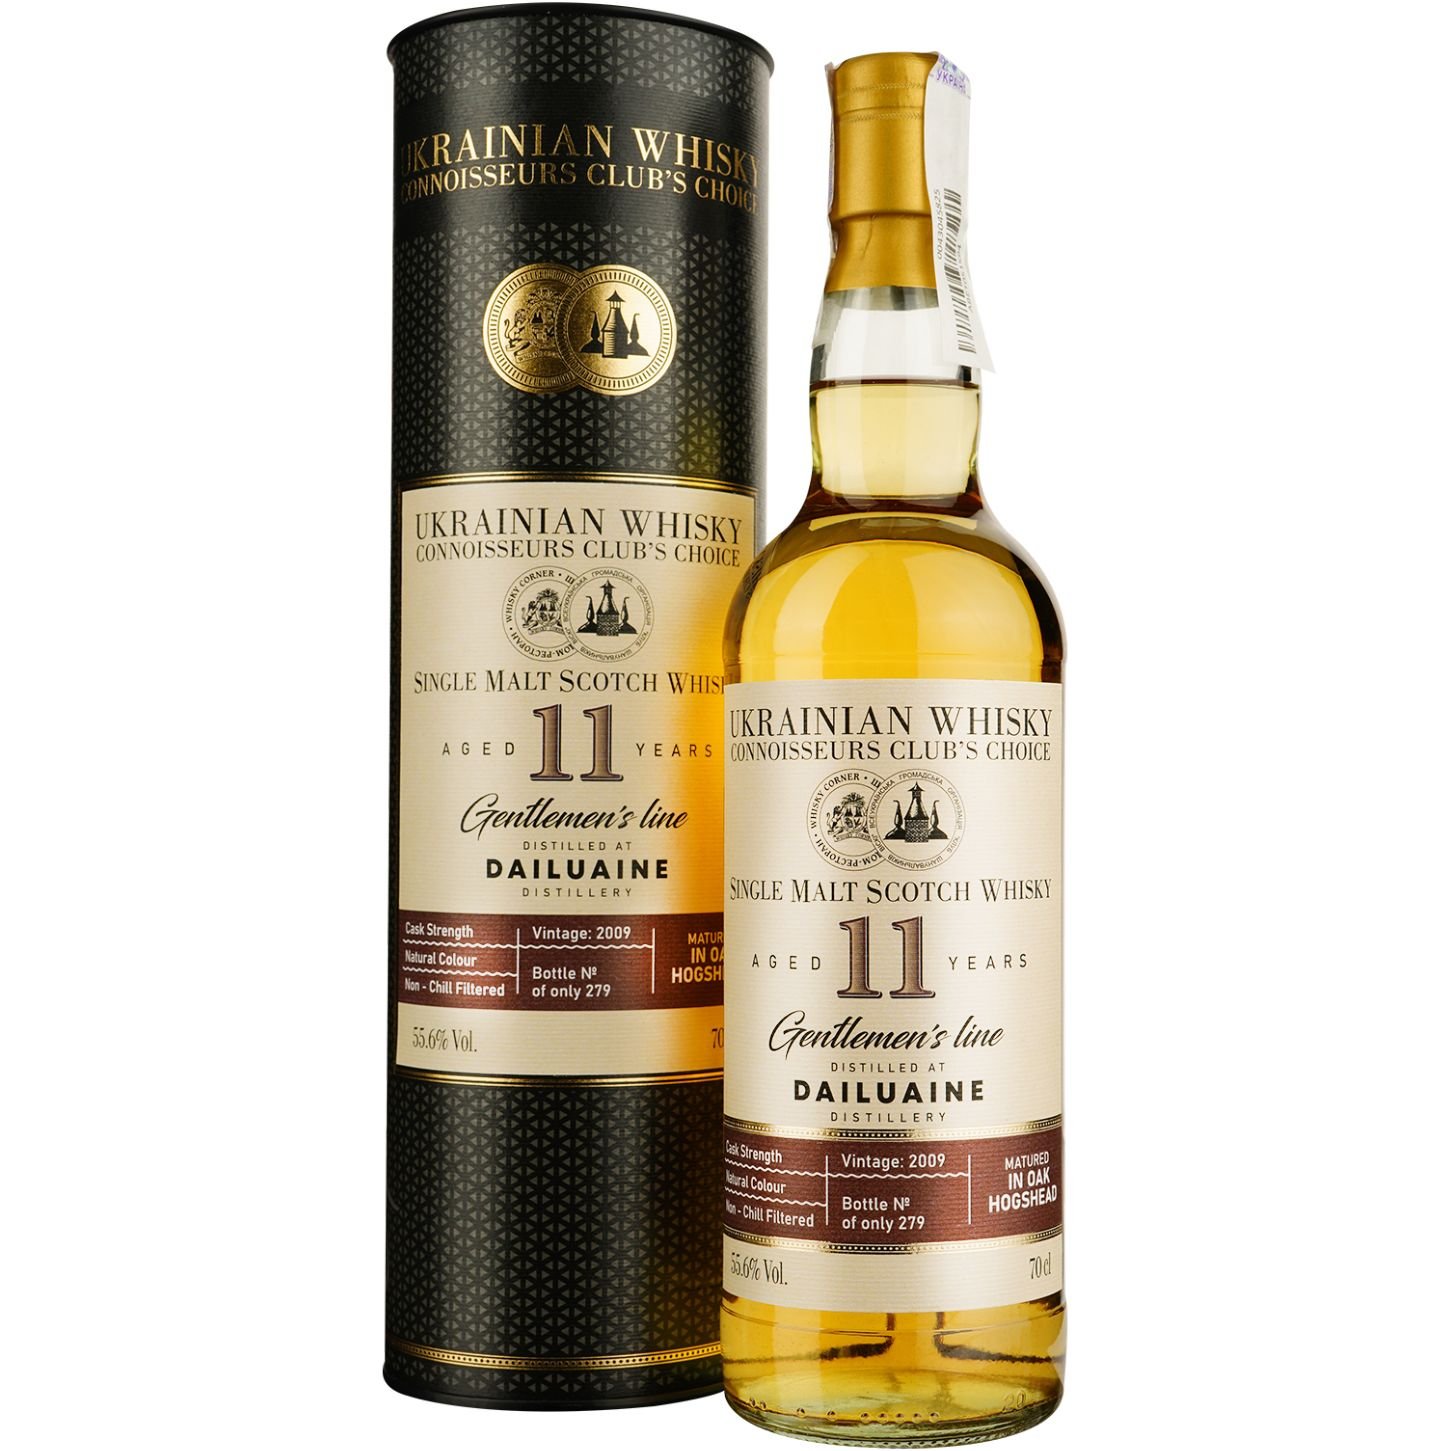 Виски Dailuaine 11 Years Old Single Malt Scotch Whisky, в подарочной упаковке, 55,6%, 0,7 л - фото 1